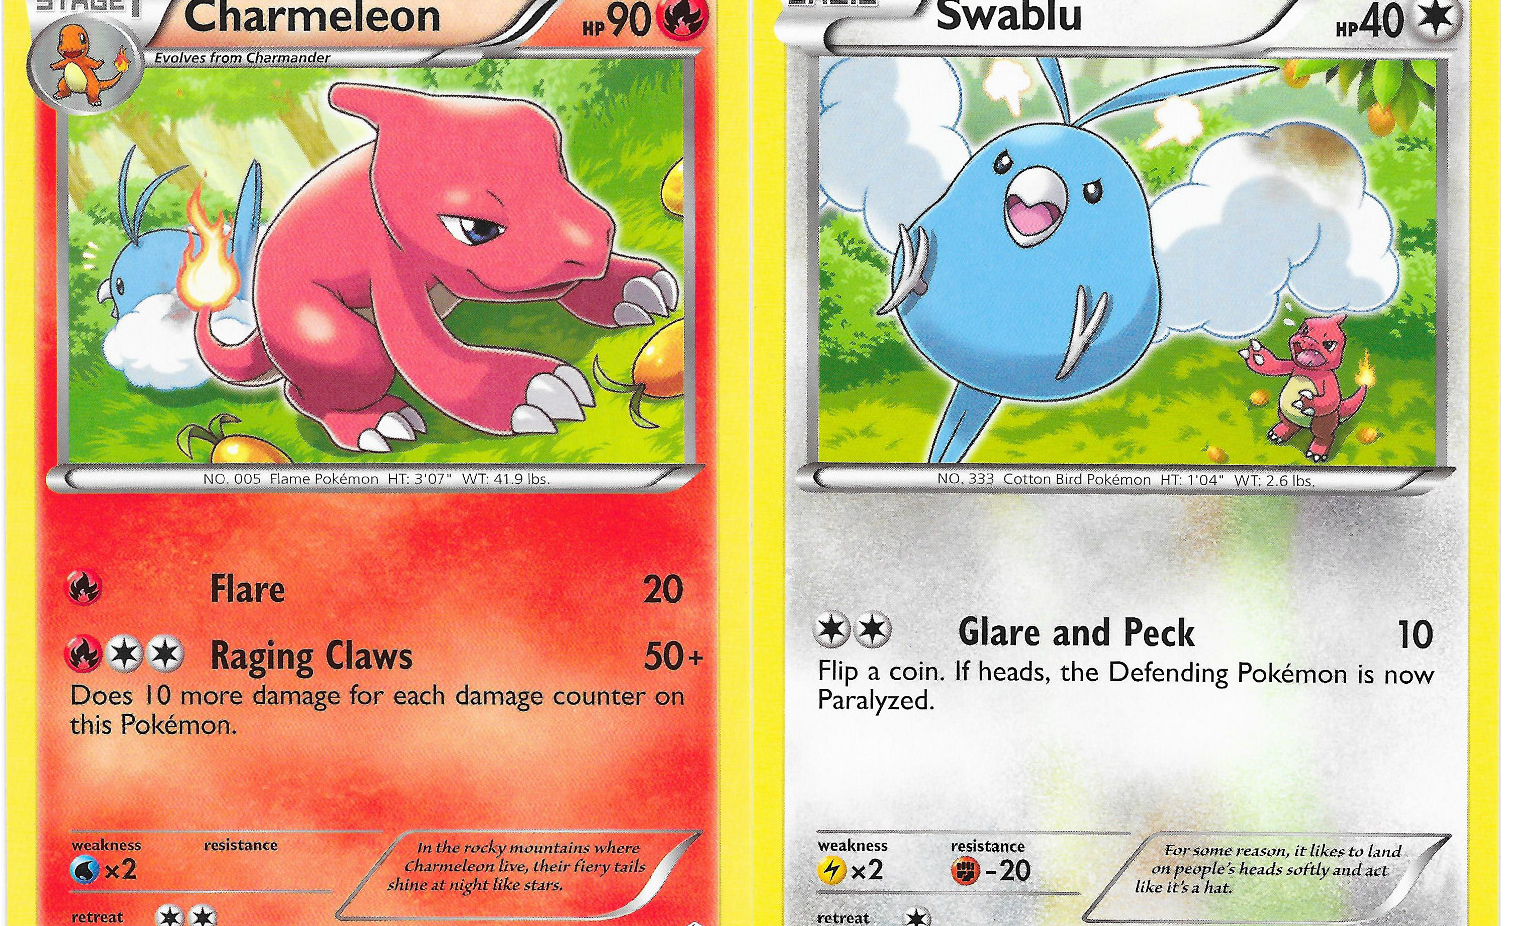 The Best Pokémon Cards Are Like Mini Comics